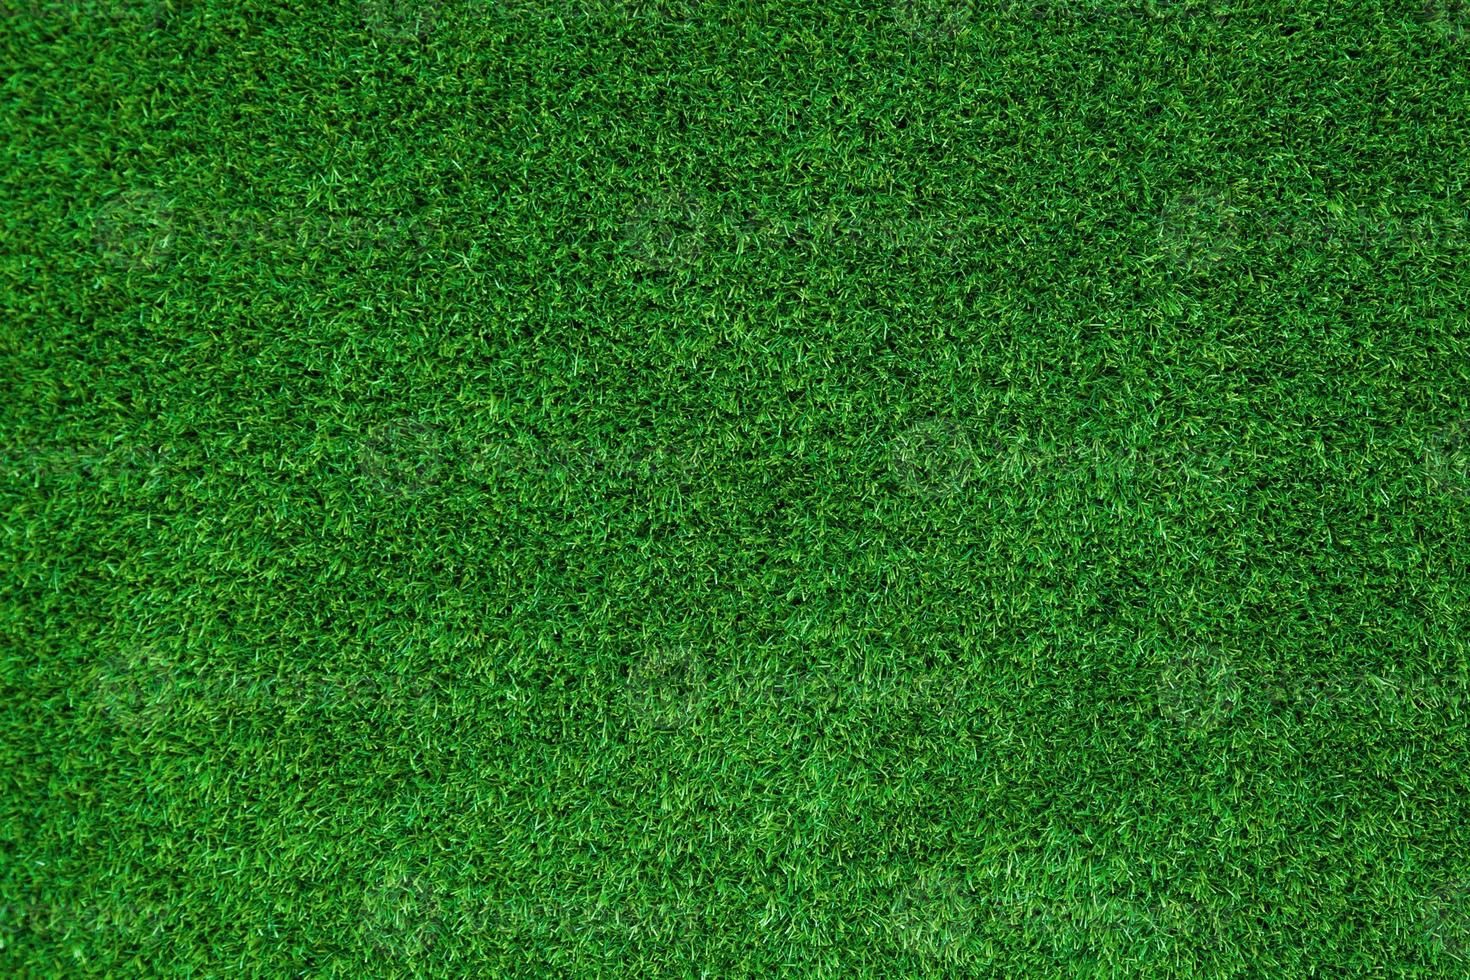 Abstract green grass football field of artificial grass background texture,Top view photo